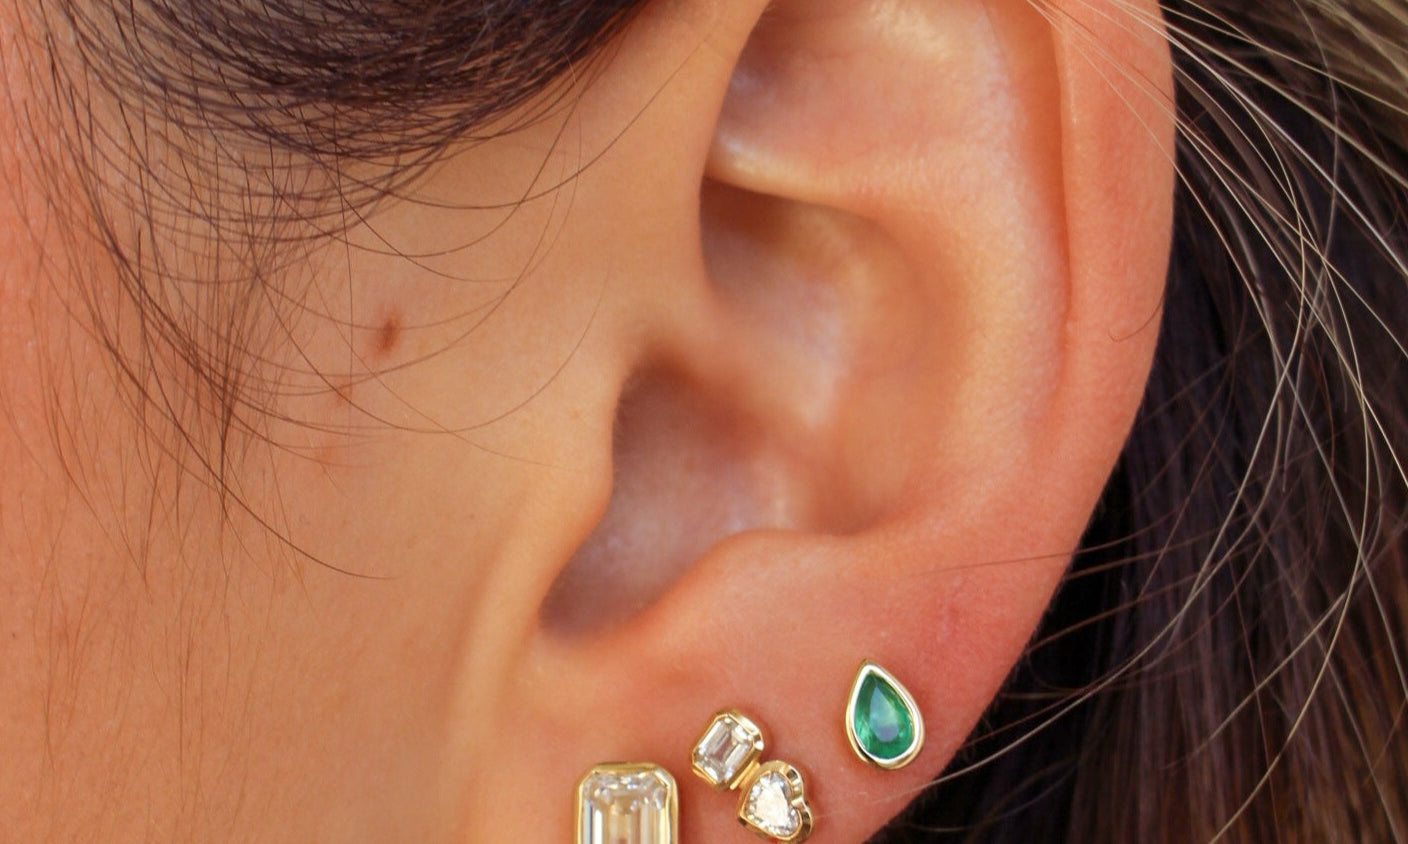 Gold Diamond Heart Earring by Monisha Melwani Fine Jewelry